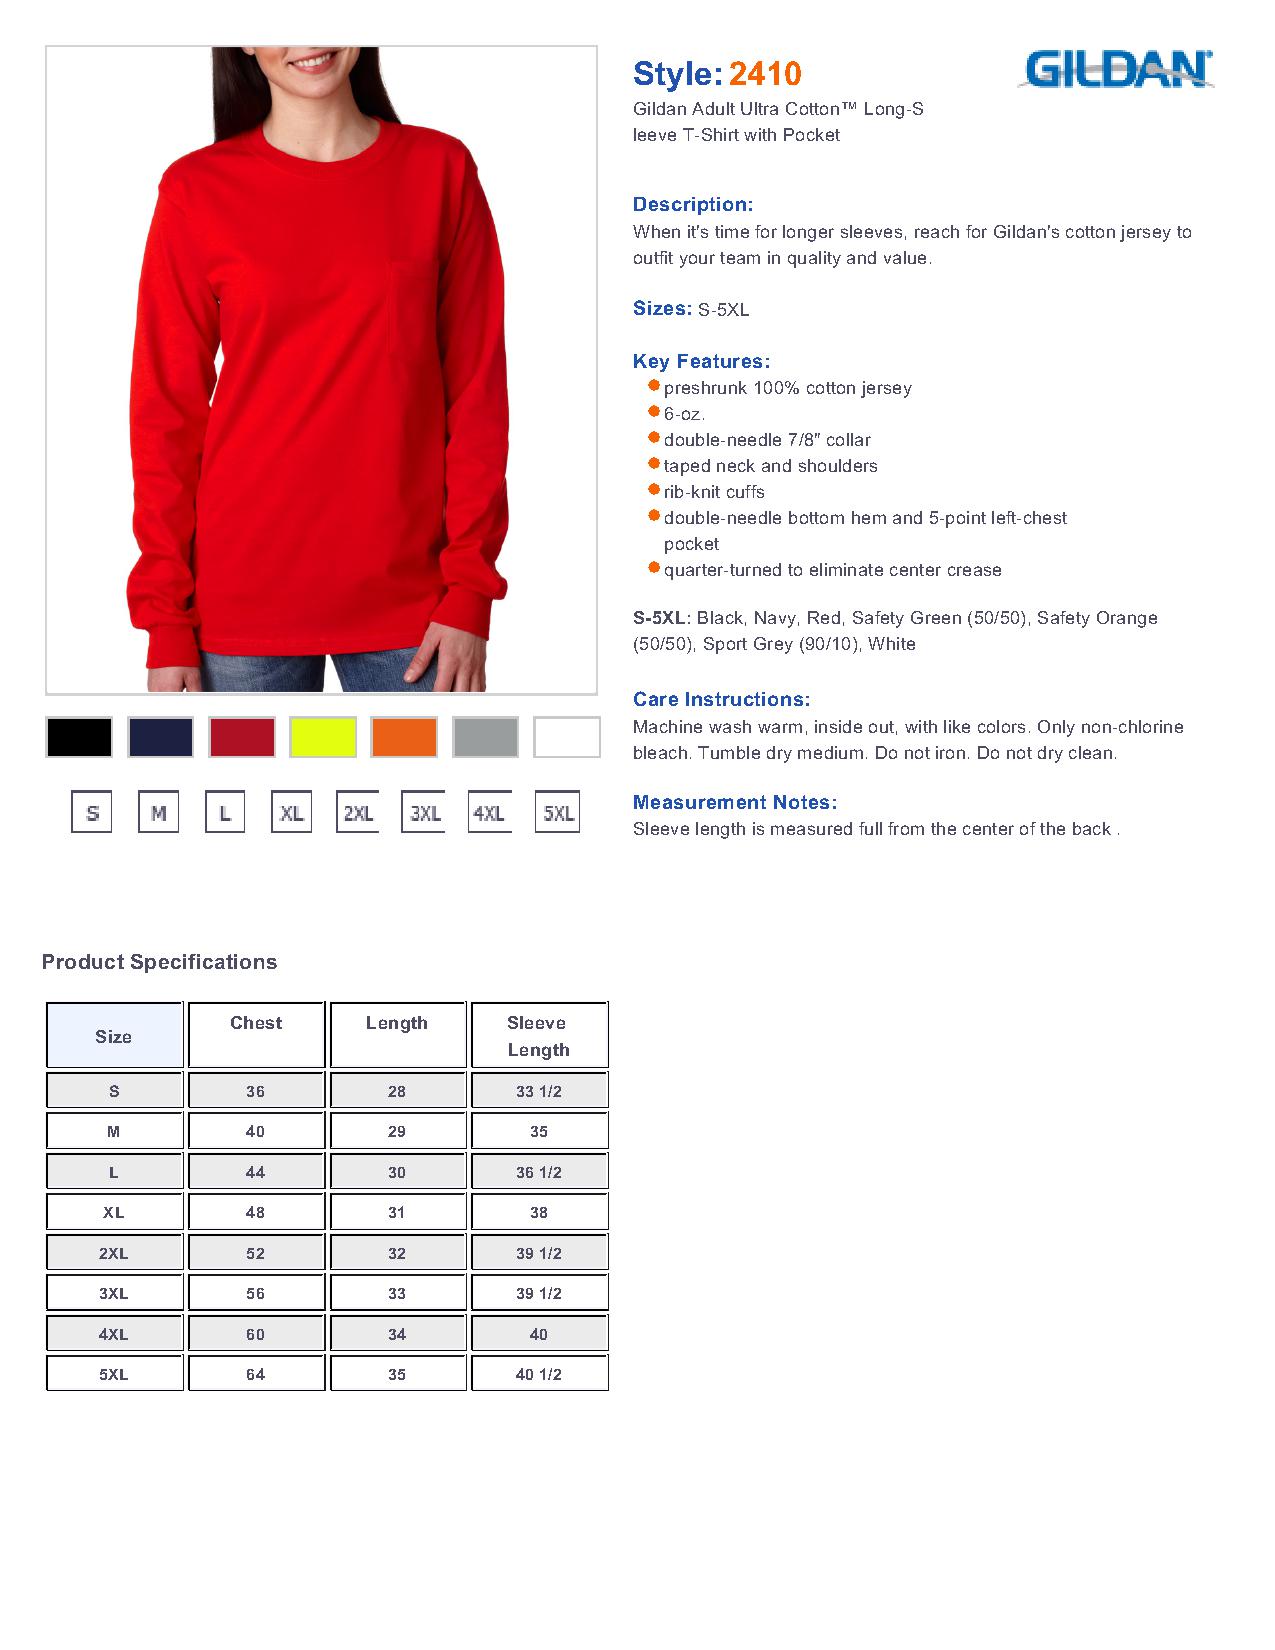 Gildan 2410 Ultra Cotton Long Sleeve T-Shirt with a Pocket $7.42 - T Shirts